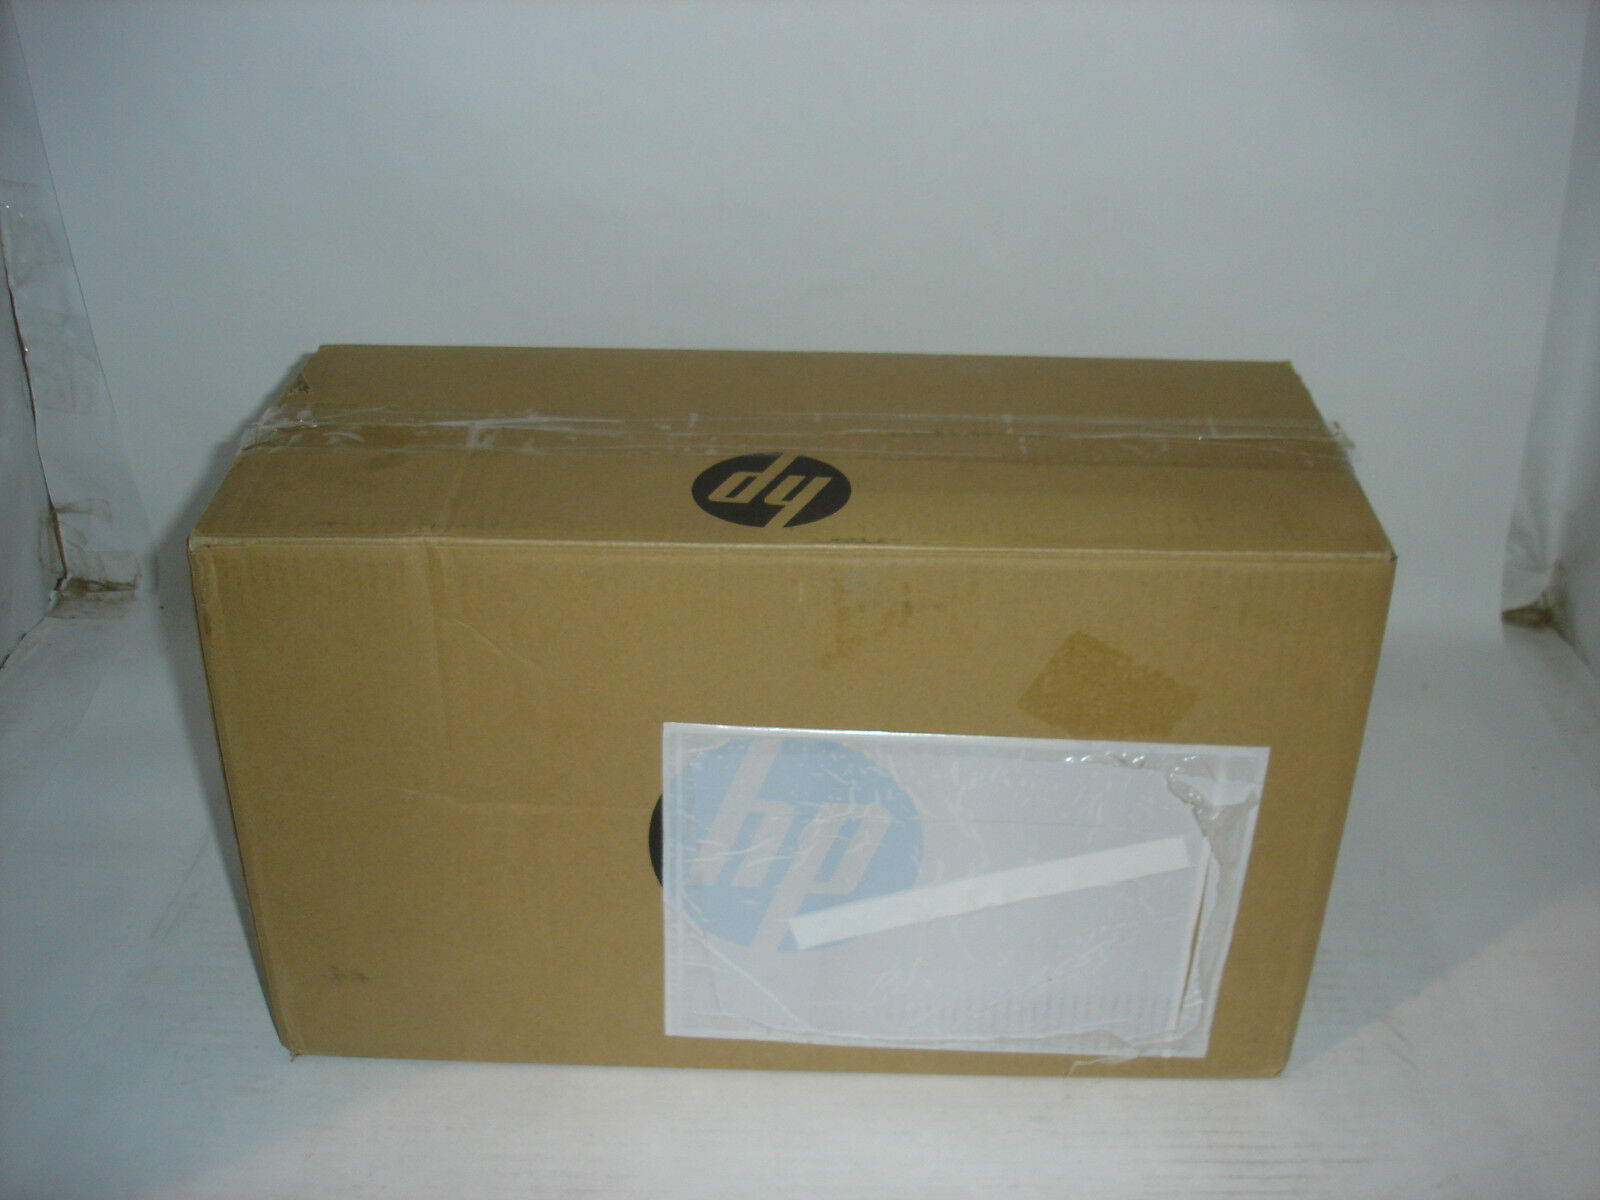 Hewlett Packard Color LaserJet Enterprise CP4025/CP4525/M651 Series CE247A  220V